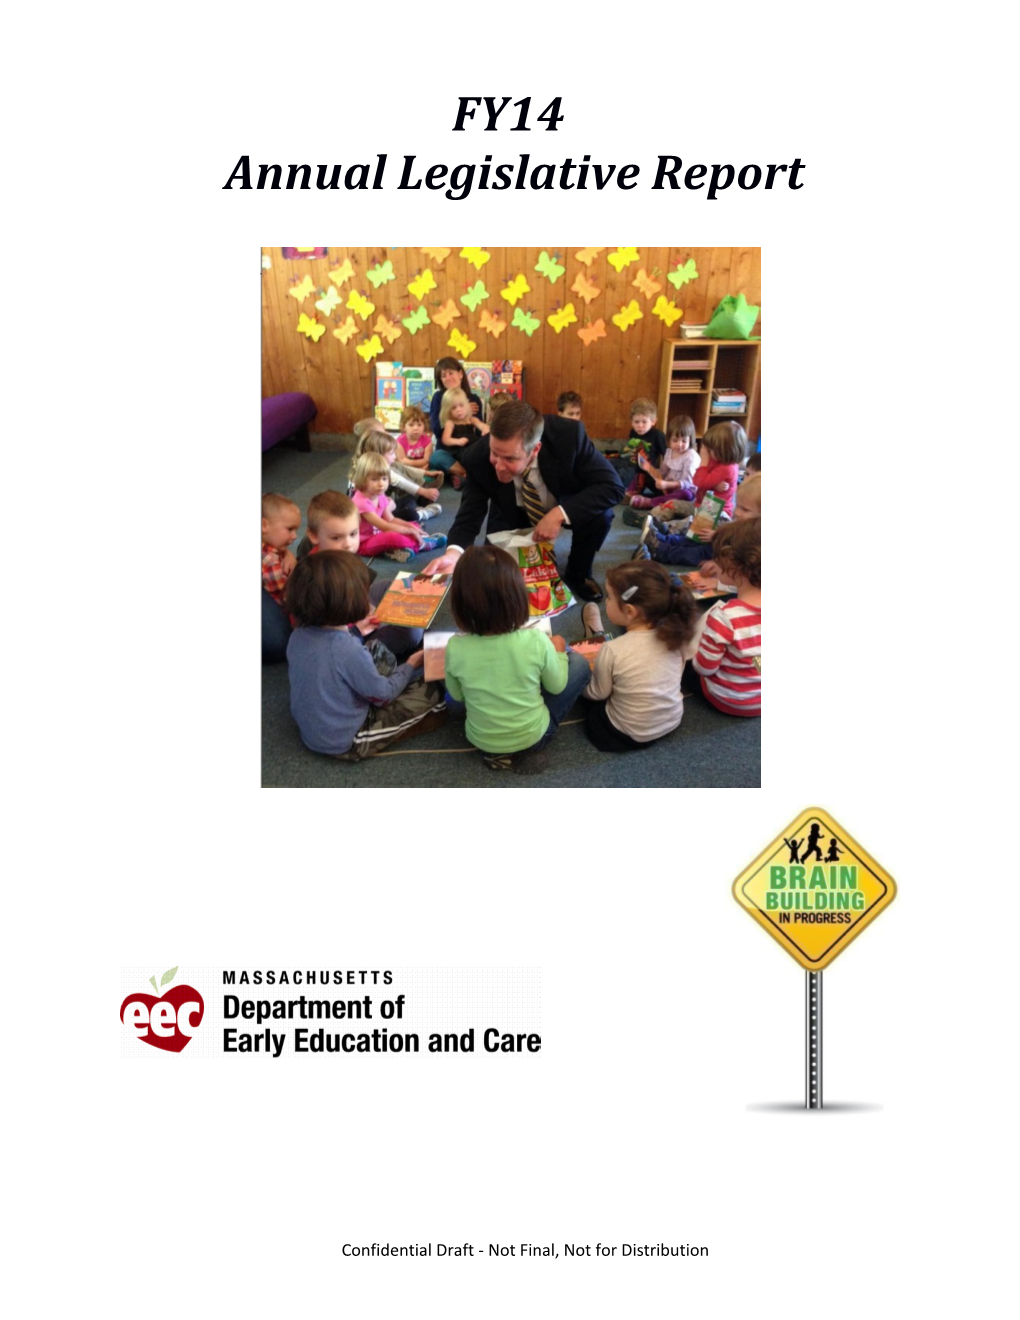 Annual Legislative Report